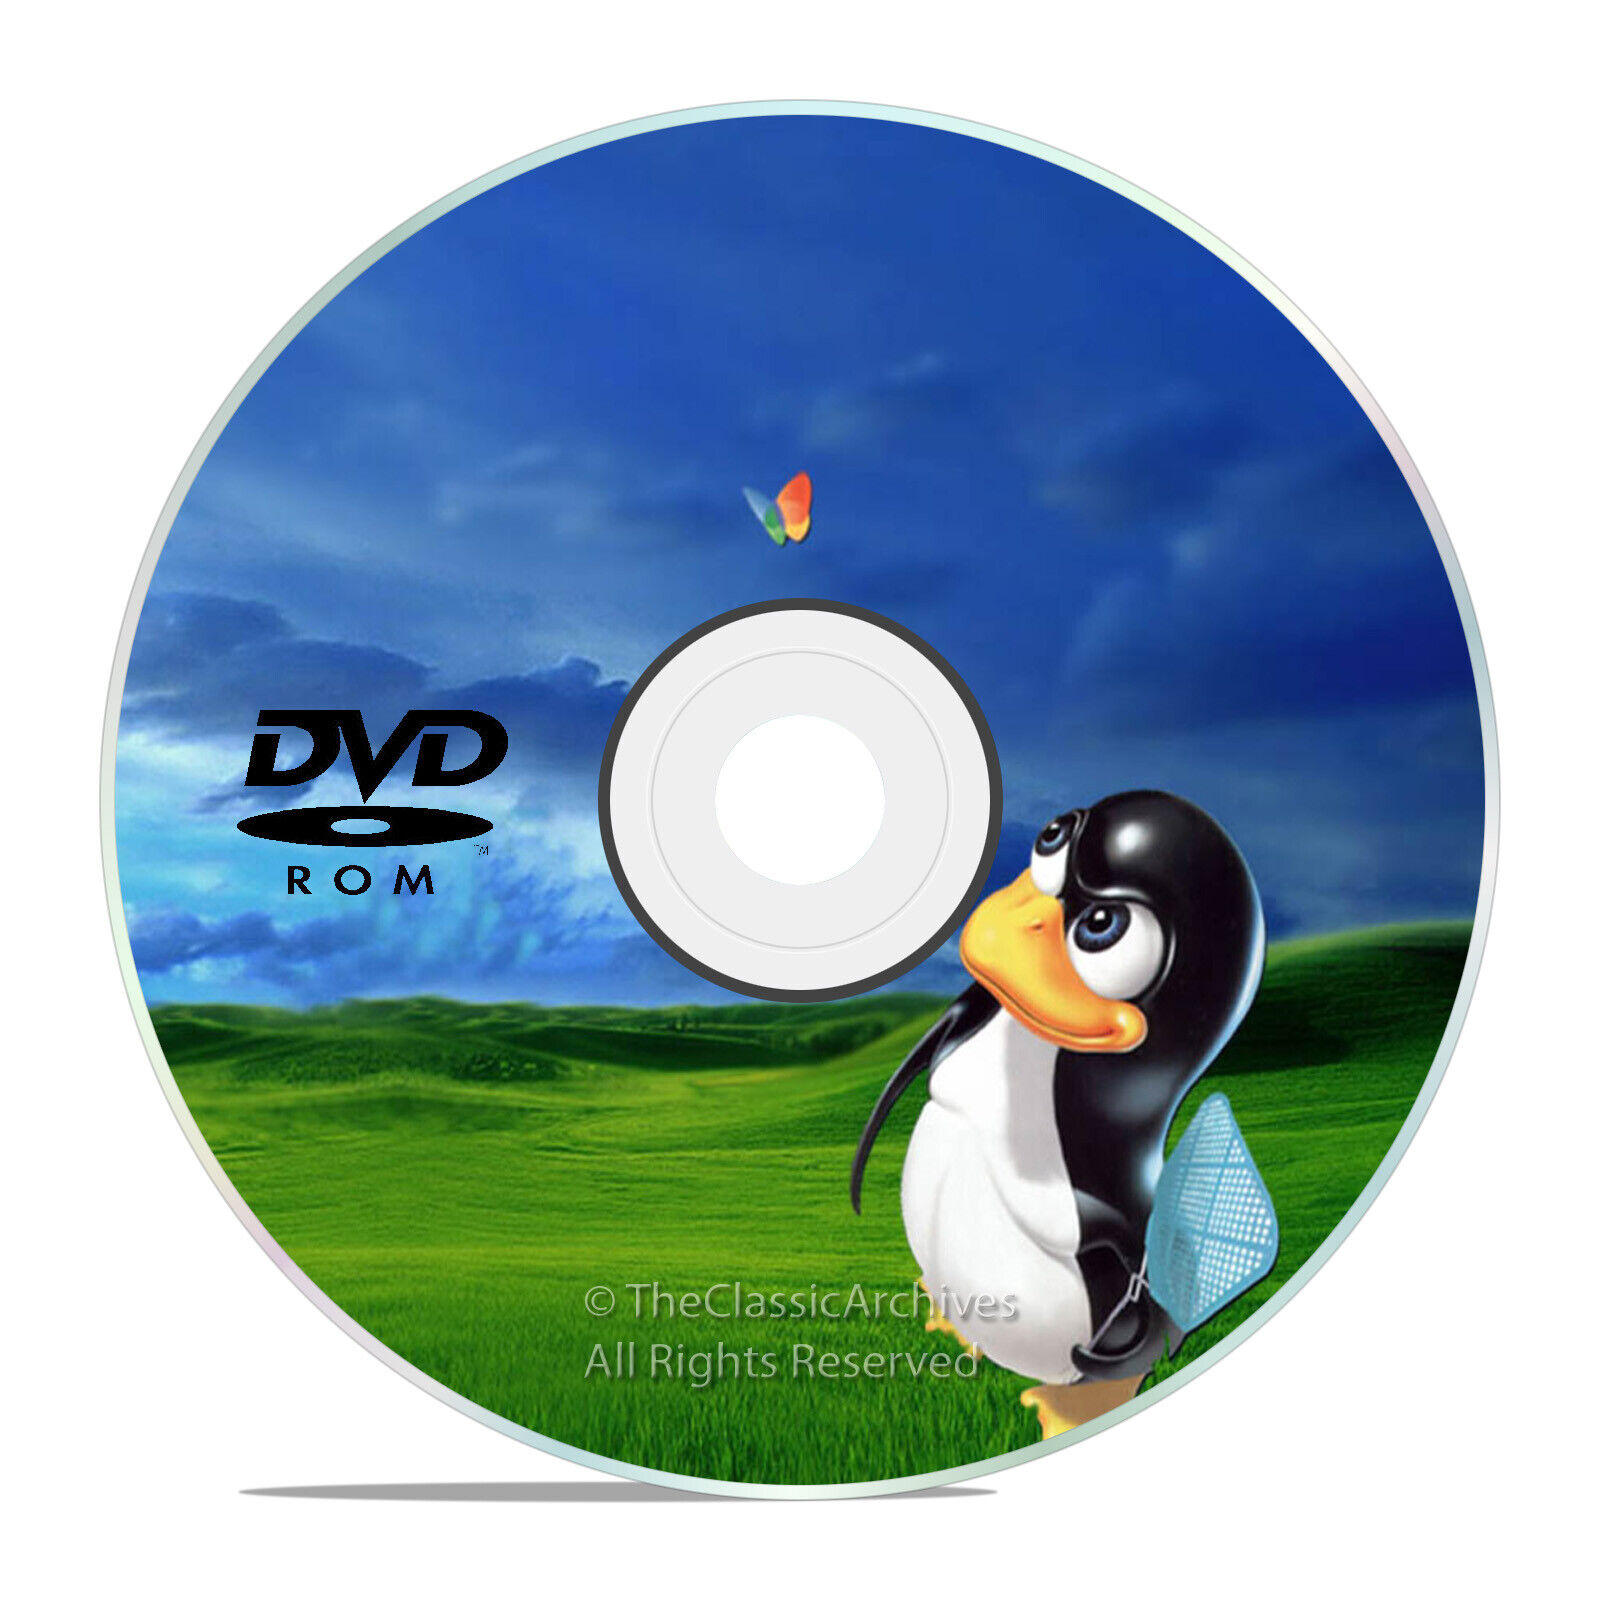 LINUX UBUNTU 64 BIT OPERATING SYSTEM-DUMP WINDOWS 7, GAMES PACKAGE INC 18.10 DVD